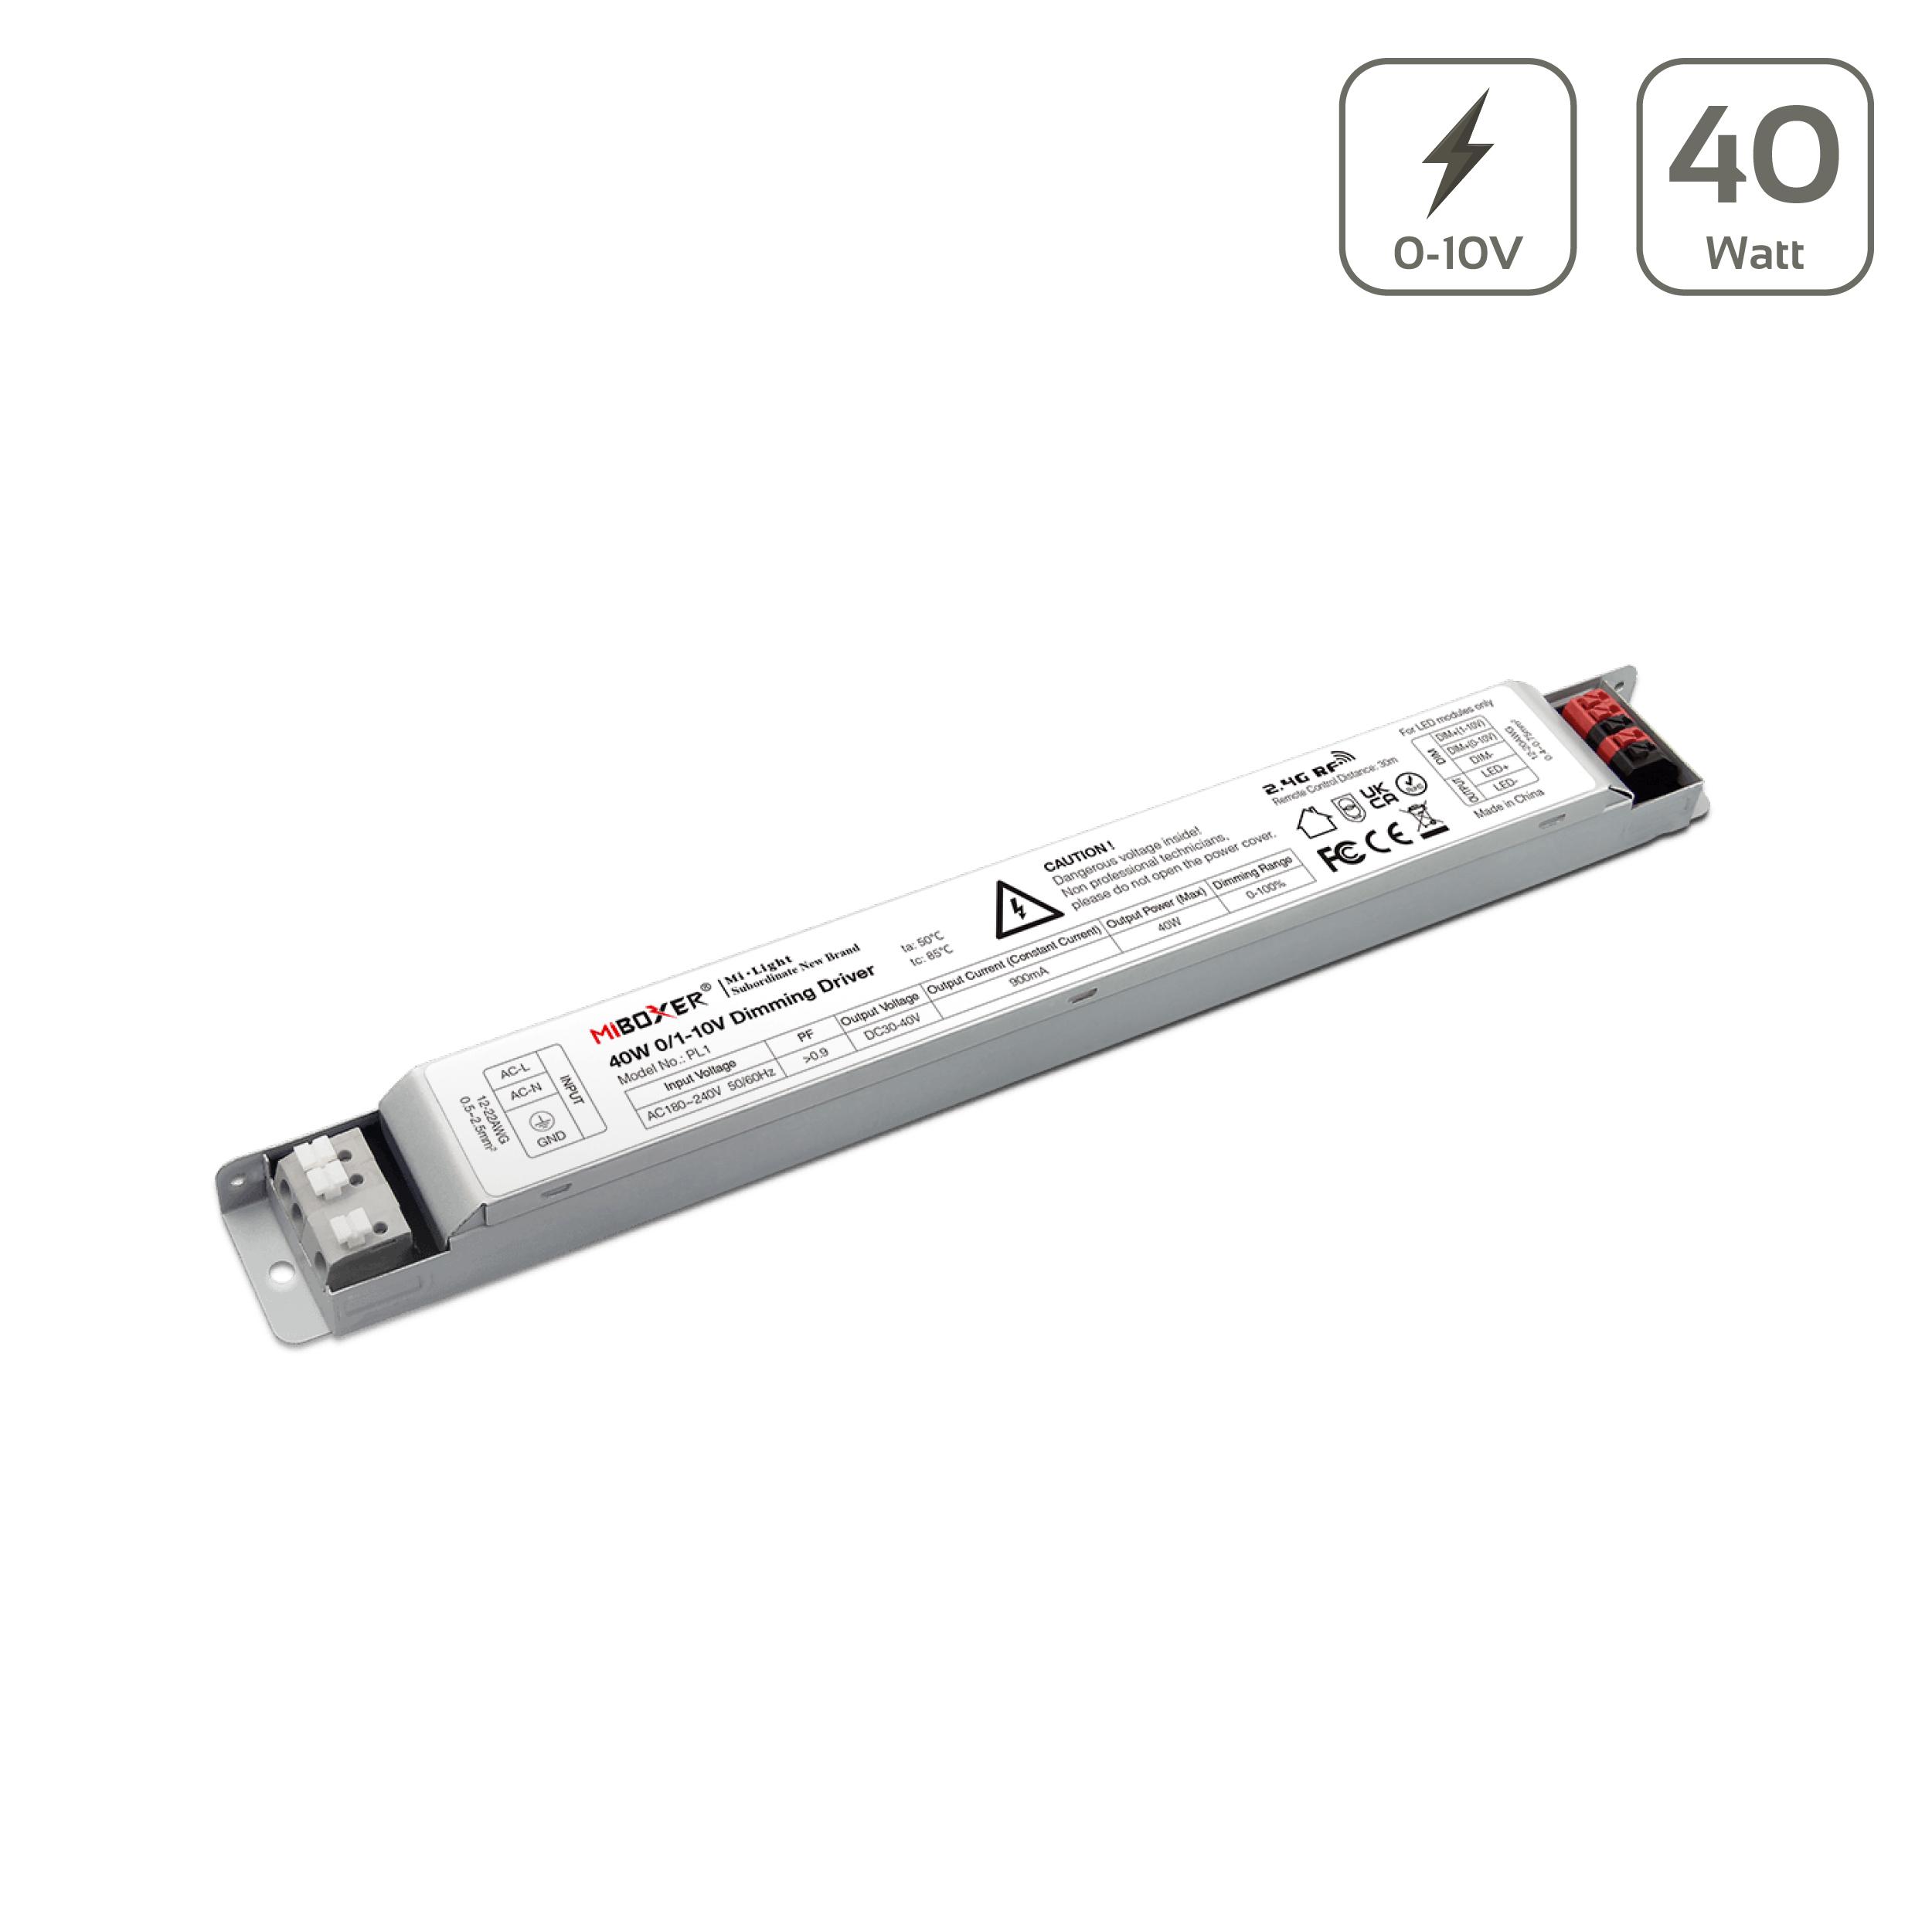 MiBoxer LED Treiber 40W 30-40V 0,9A IP20 dimmbar 1-10V 2.4G PL1